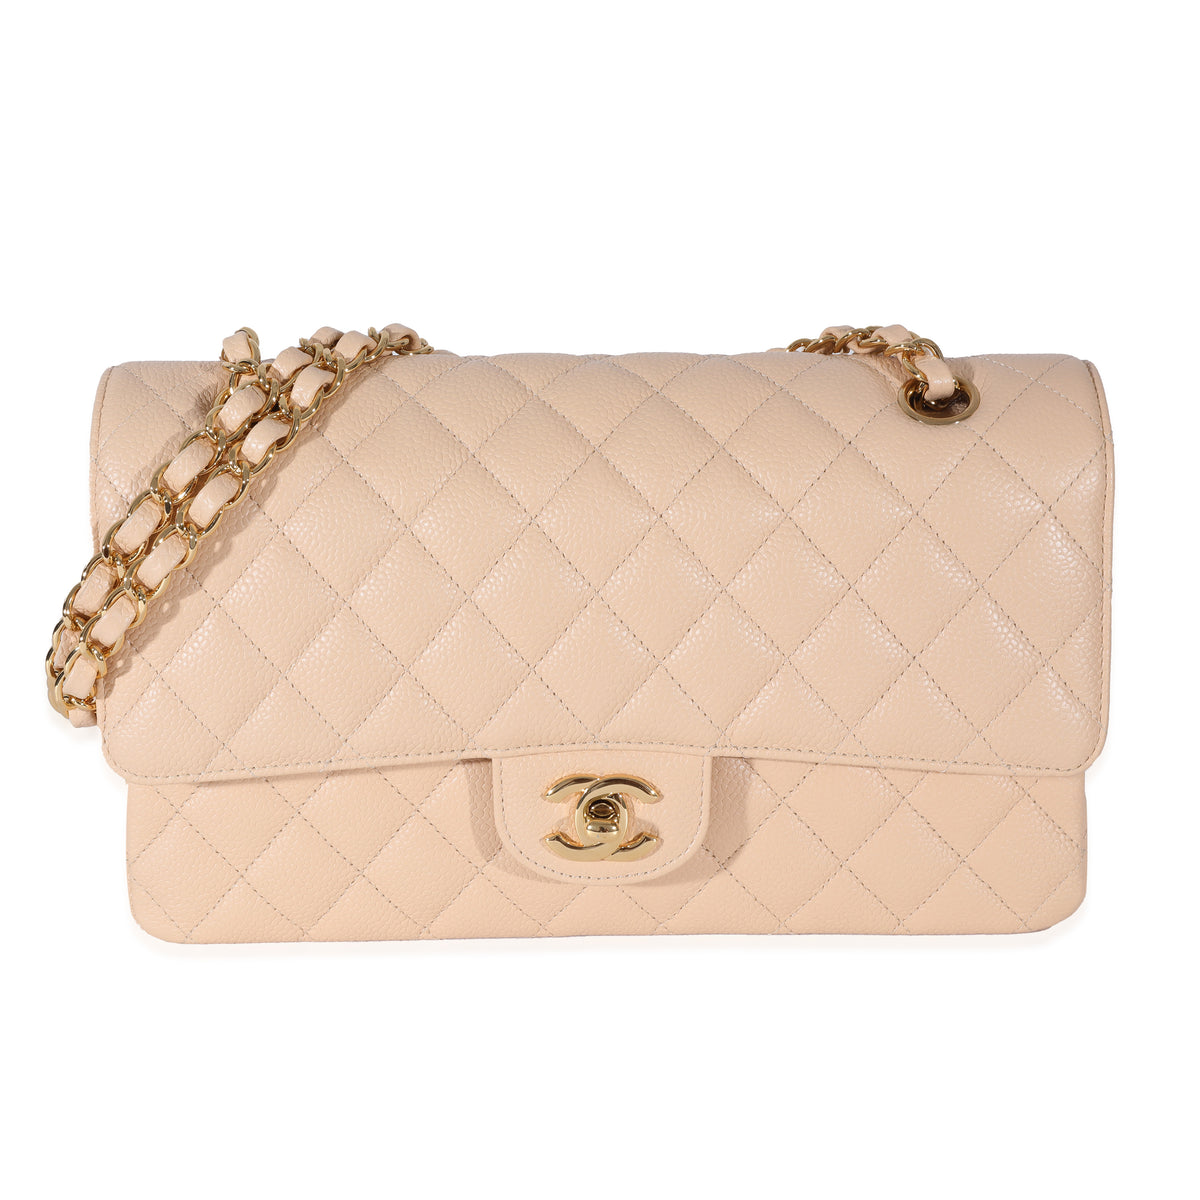 Chanel Beige Caviar Medium Classic Double Flap Bag